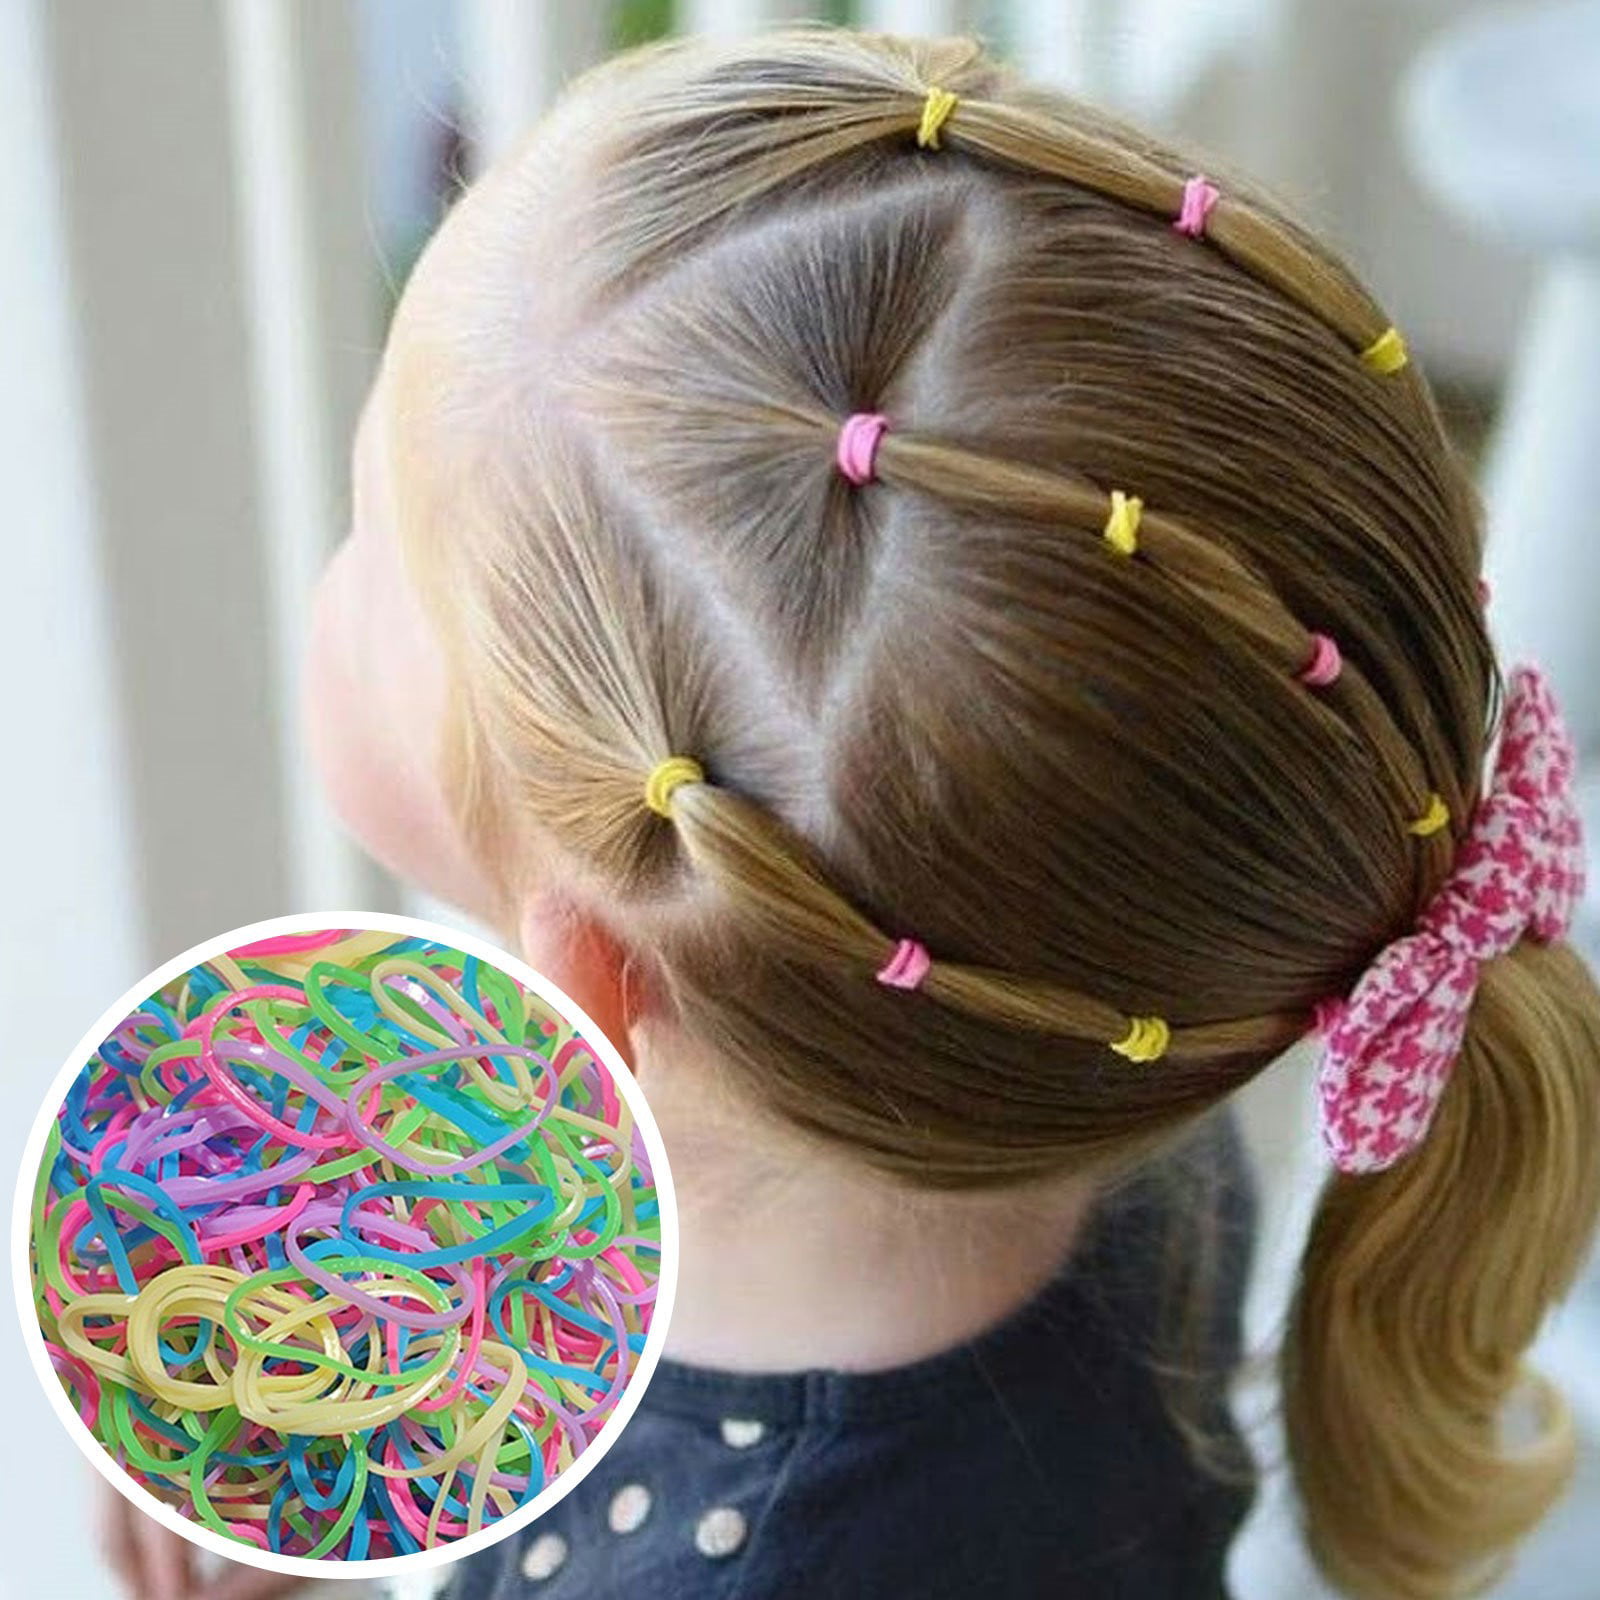 Medcursor 1000 / Pack Girl Colorful Fashion Disposable Rubber Band Elastic Hair Band Clear Hair Rubber Bands Toddler Elastics Hair Ties Hair Rubber